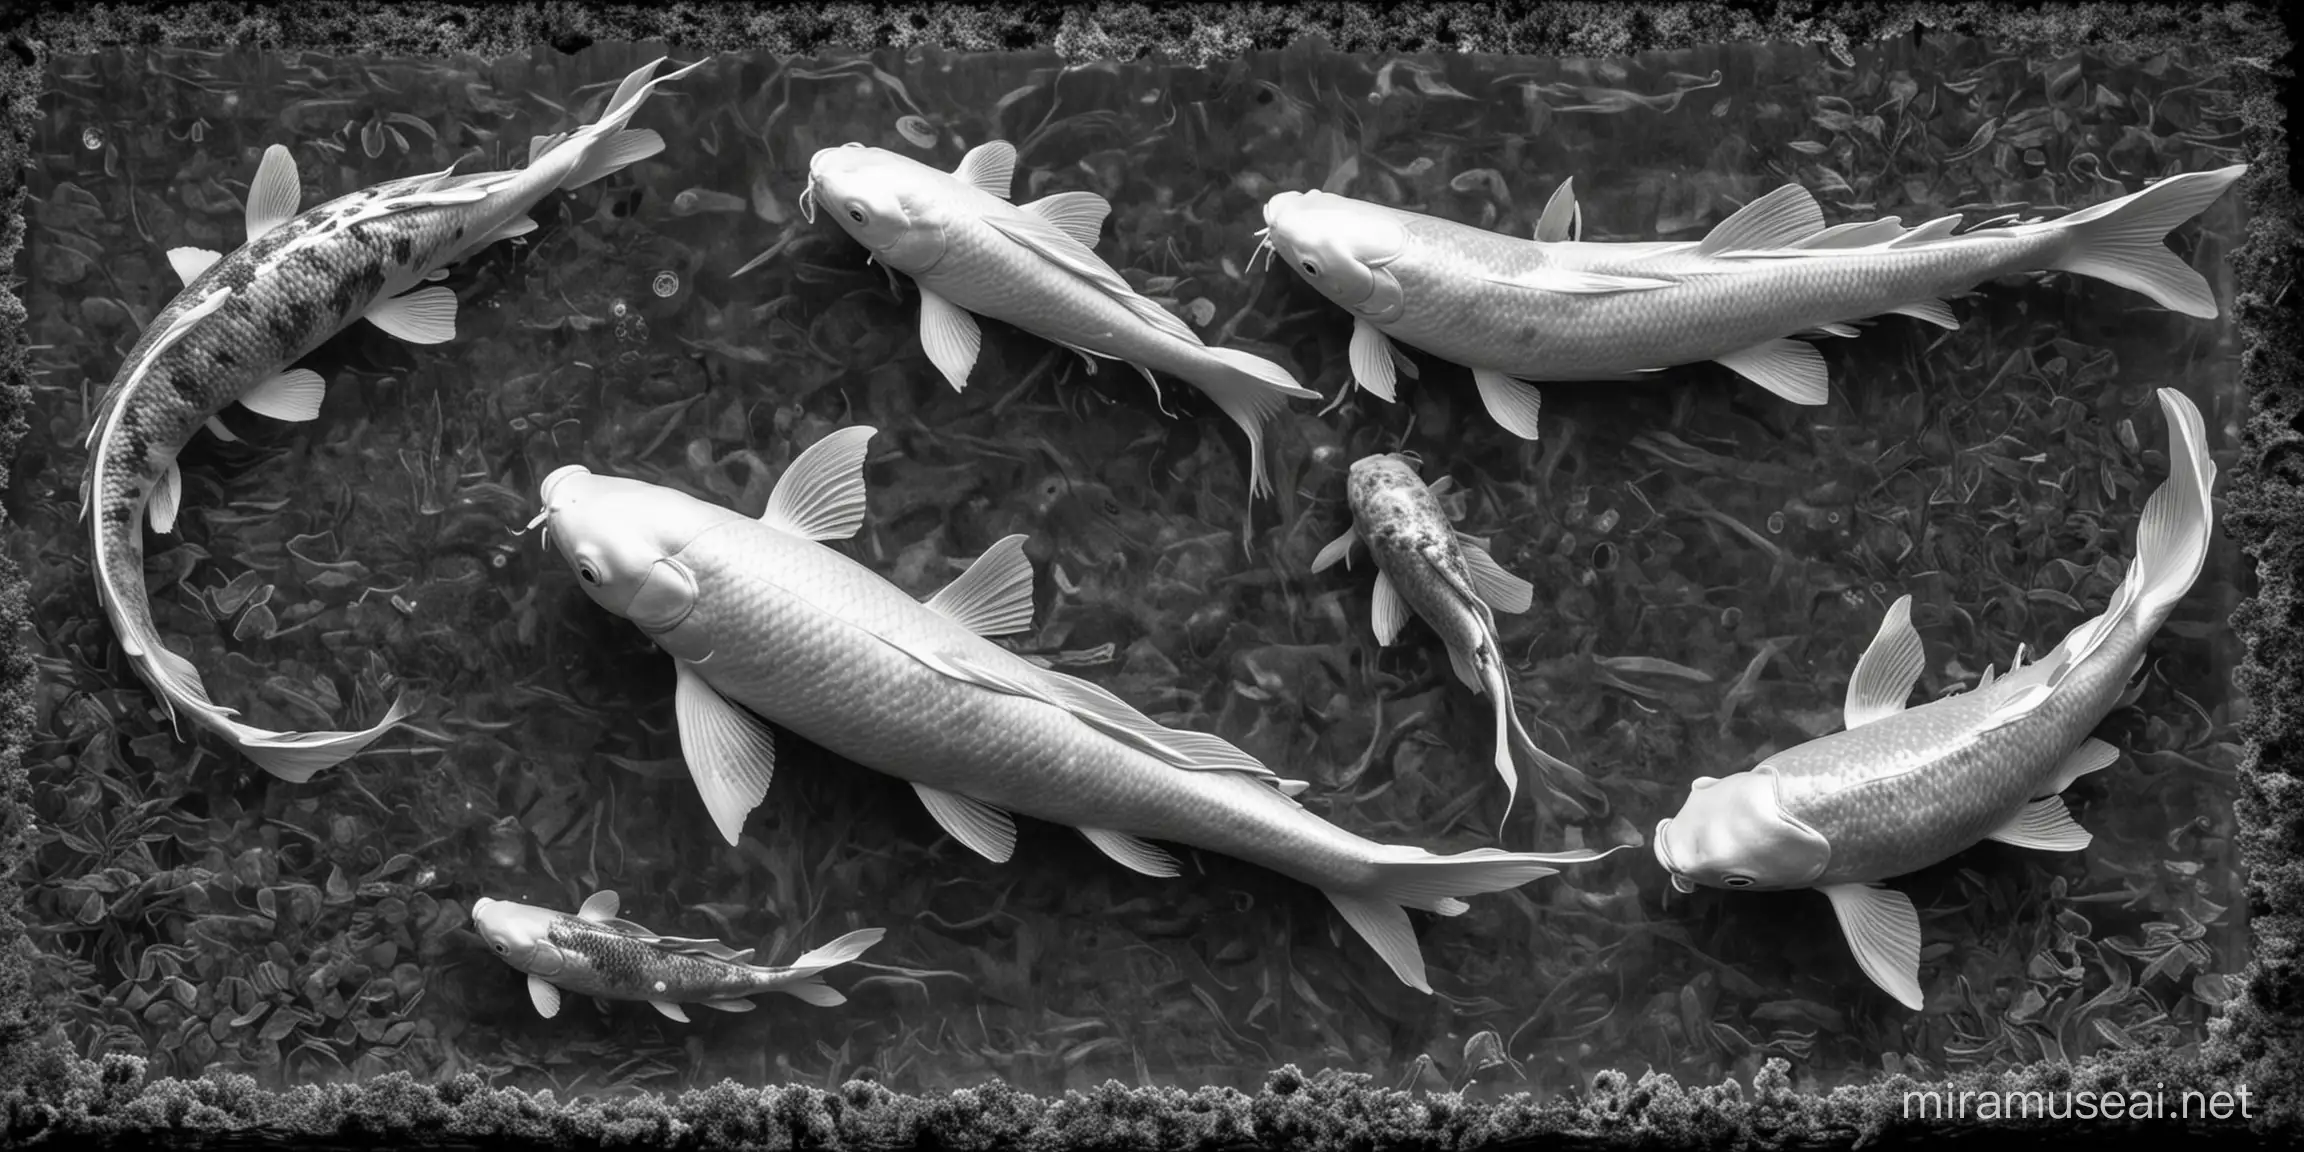 Depthmap of Koi fish in monochrome